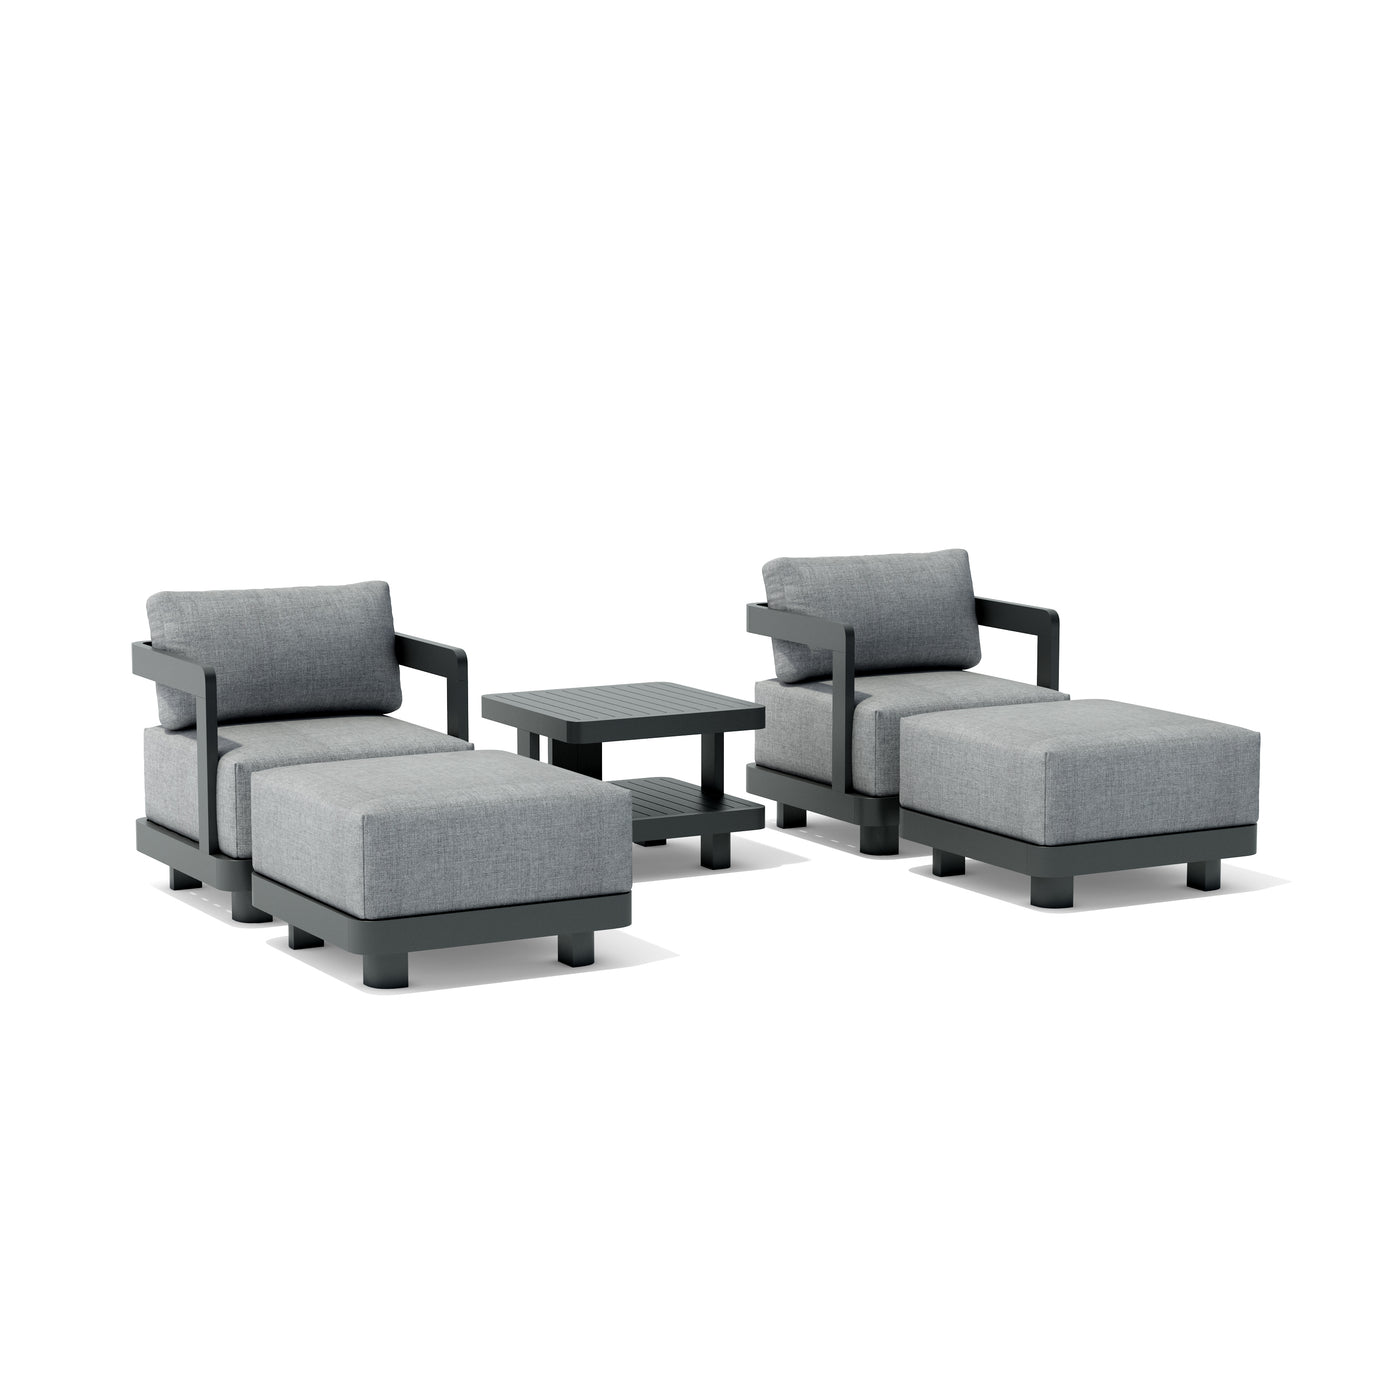 SET-905-AL 5-pc Granada Aluminum Deep Seating